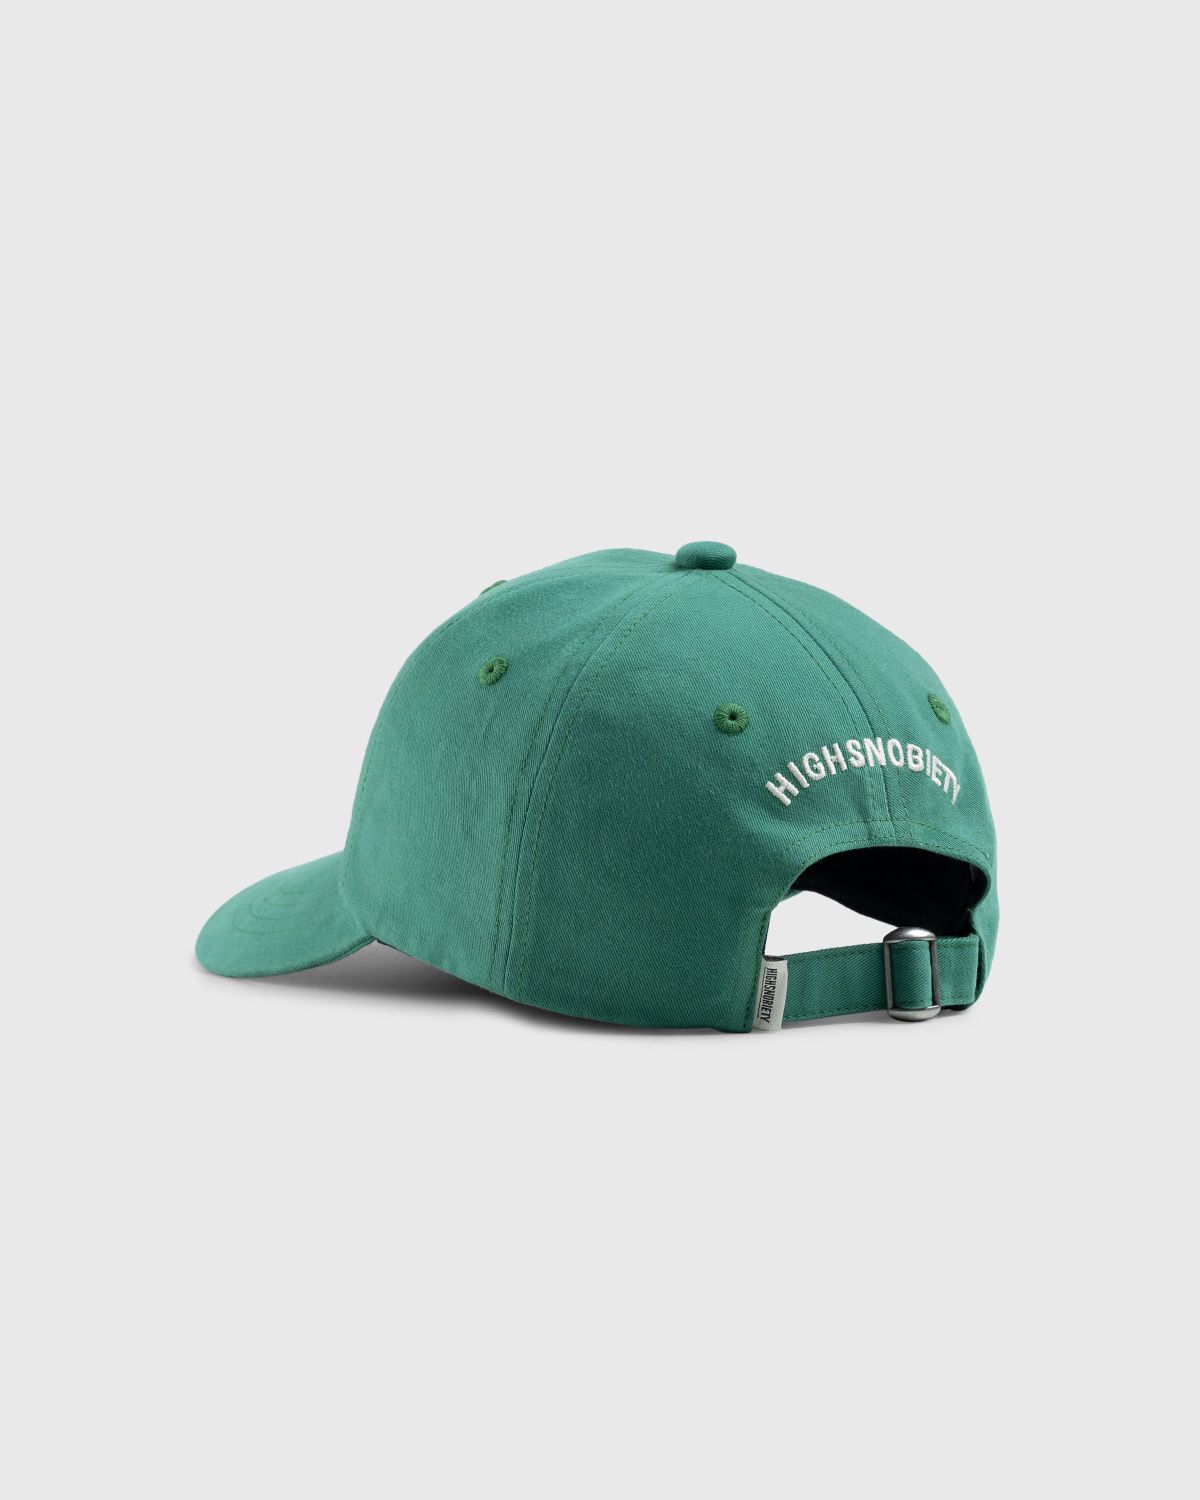 Highsnobiety – Not in Paris 5 Cap Green - Hats - Green - Image 2